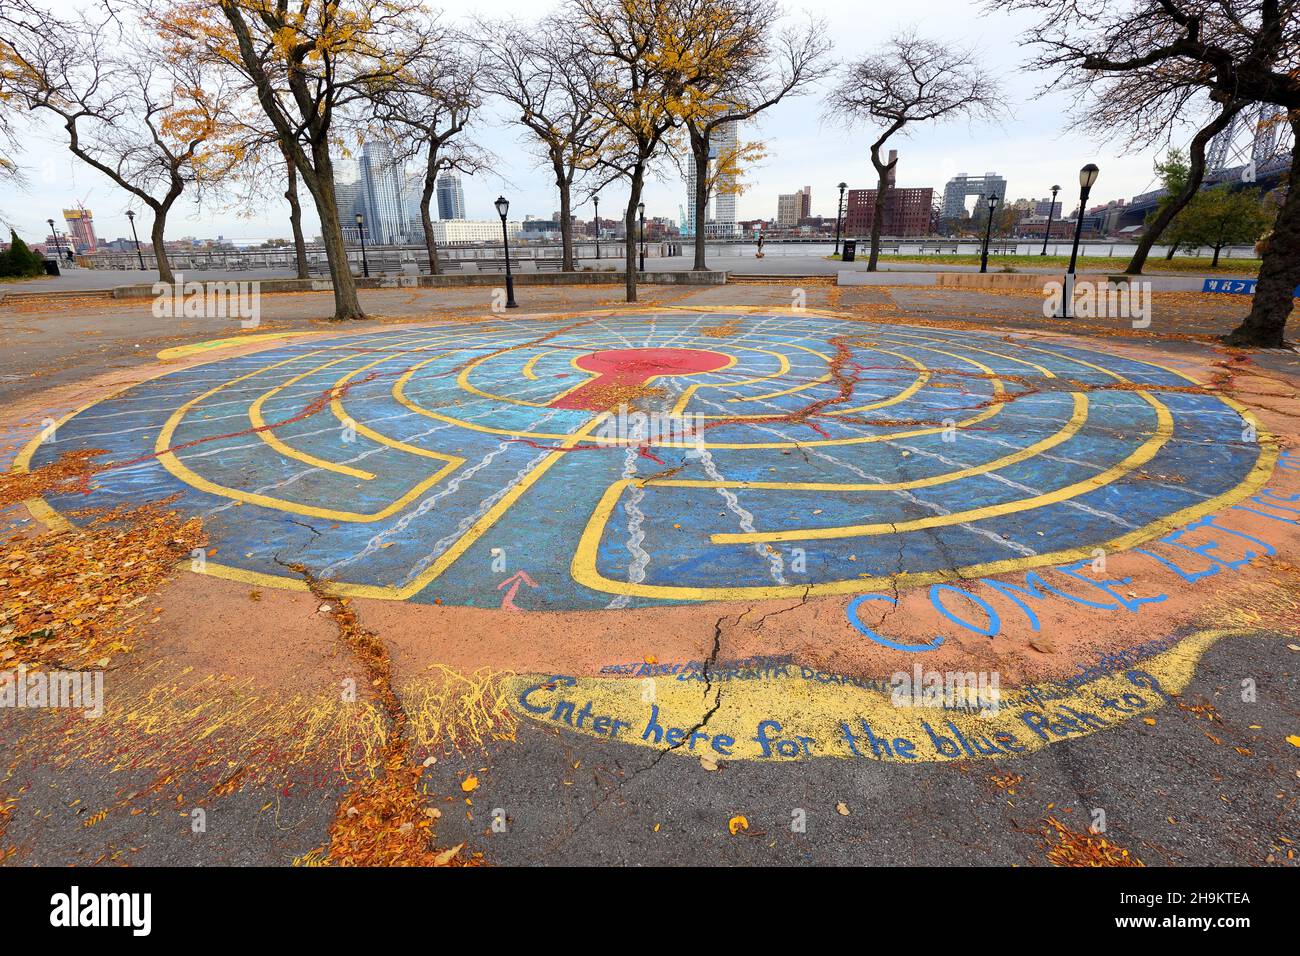 [Storico] East River Reflections Labyrinth, East River Park, New York. Un classico labirinto a 7 circuiti dipinto a terra. Novembre 14, 2021. Foto Stock